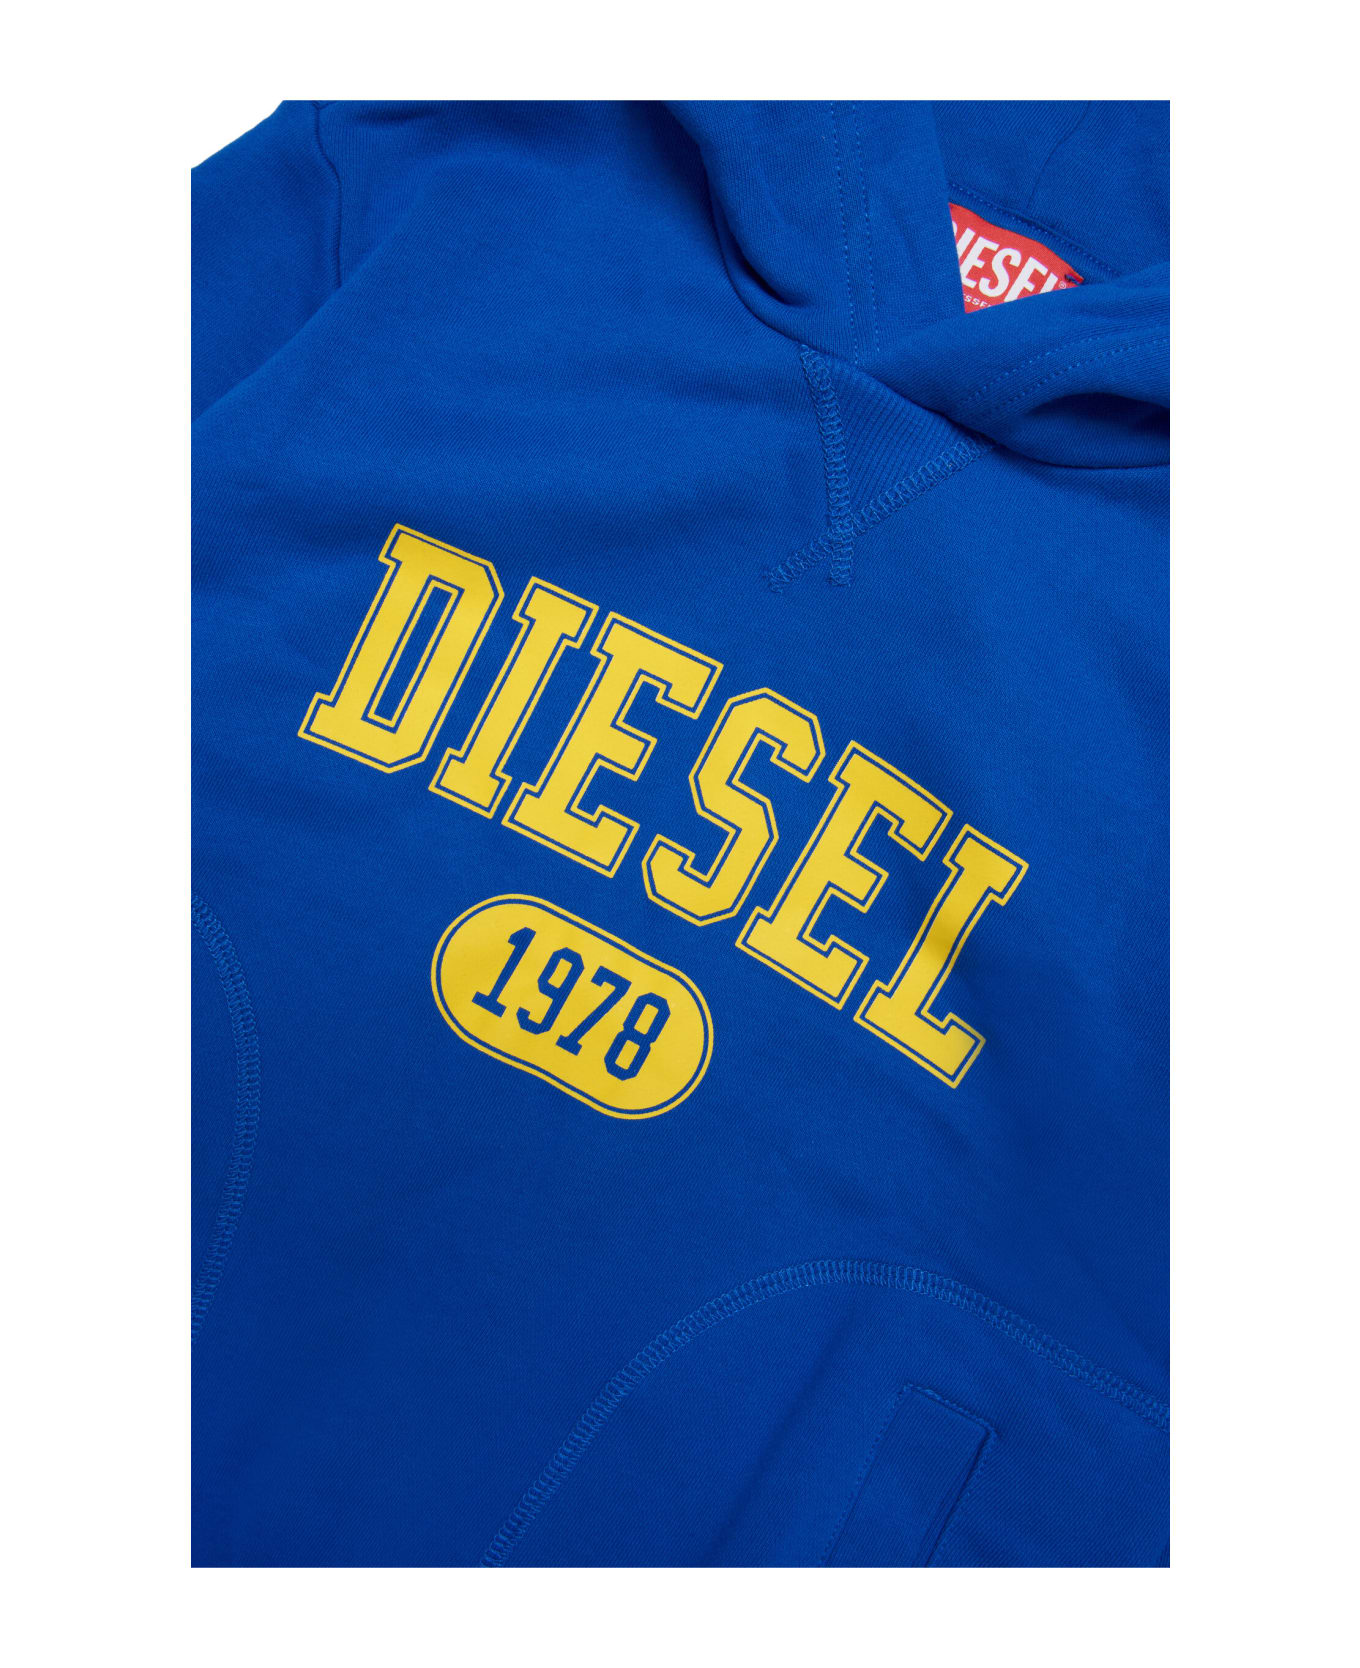 Diesel Smuster Over Sweat-shirt Diesel - Polo Ralph Lauren Czerwony T-shirt z logo na kieszeni